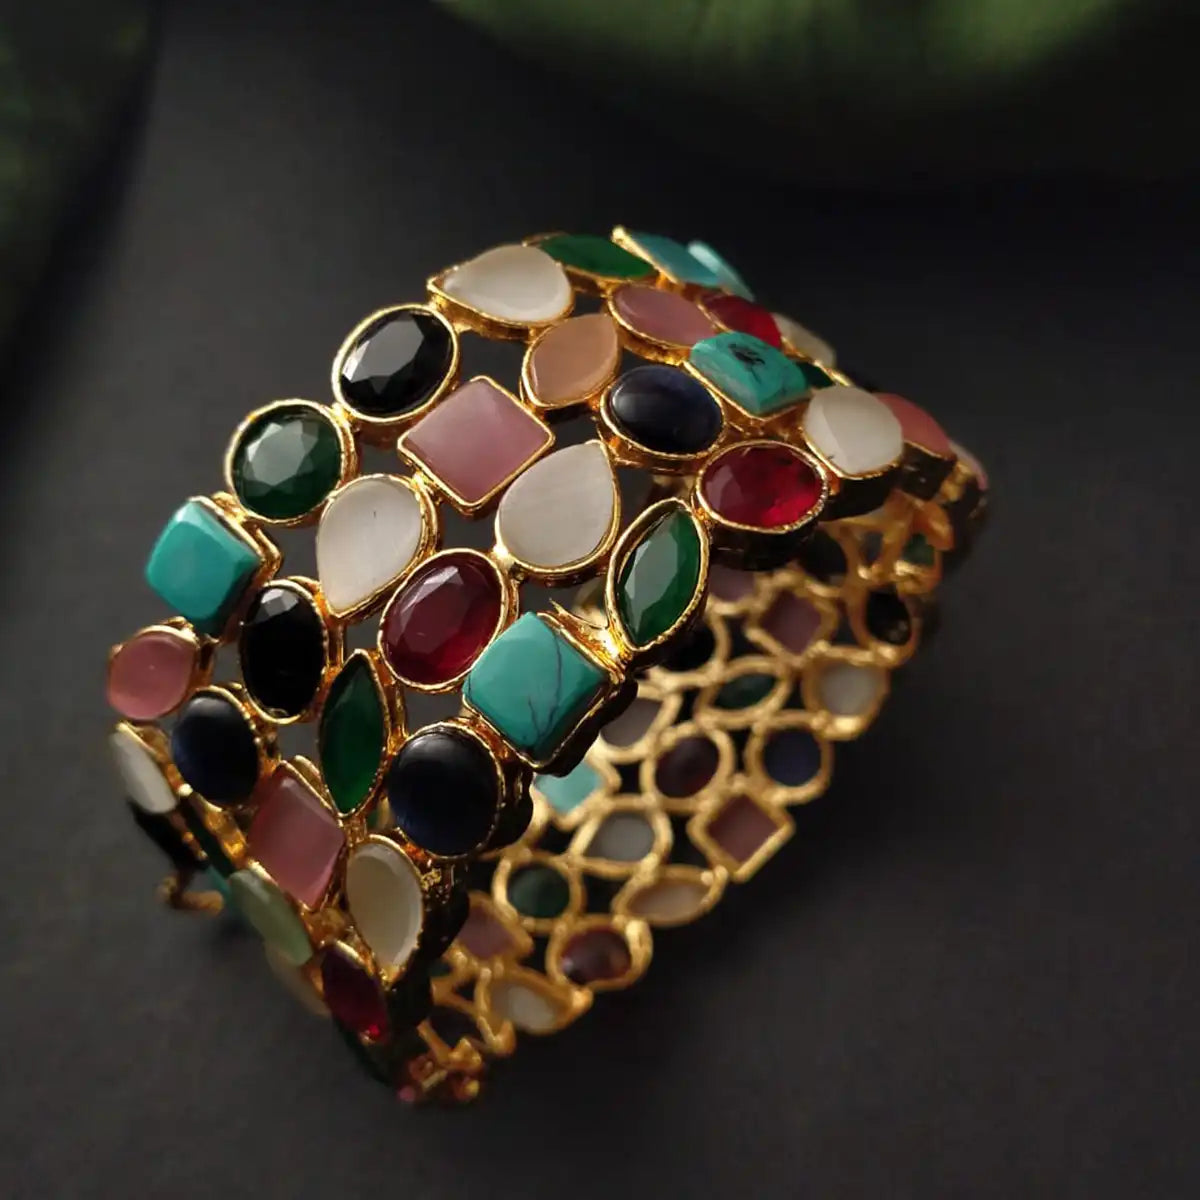 stone bangles designs with price njc-013 multi color